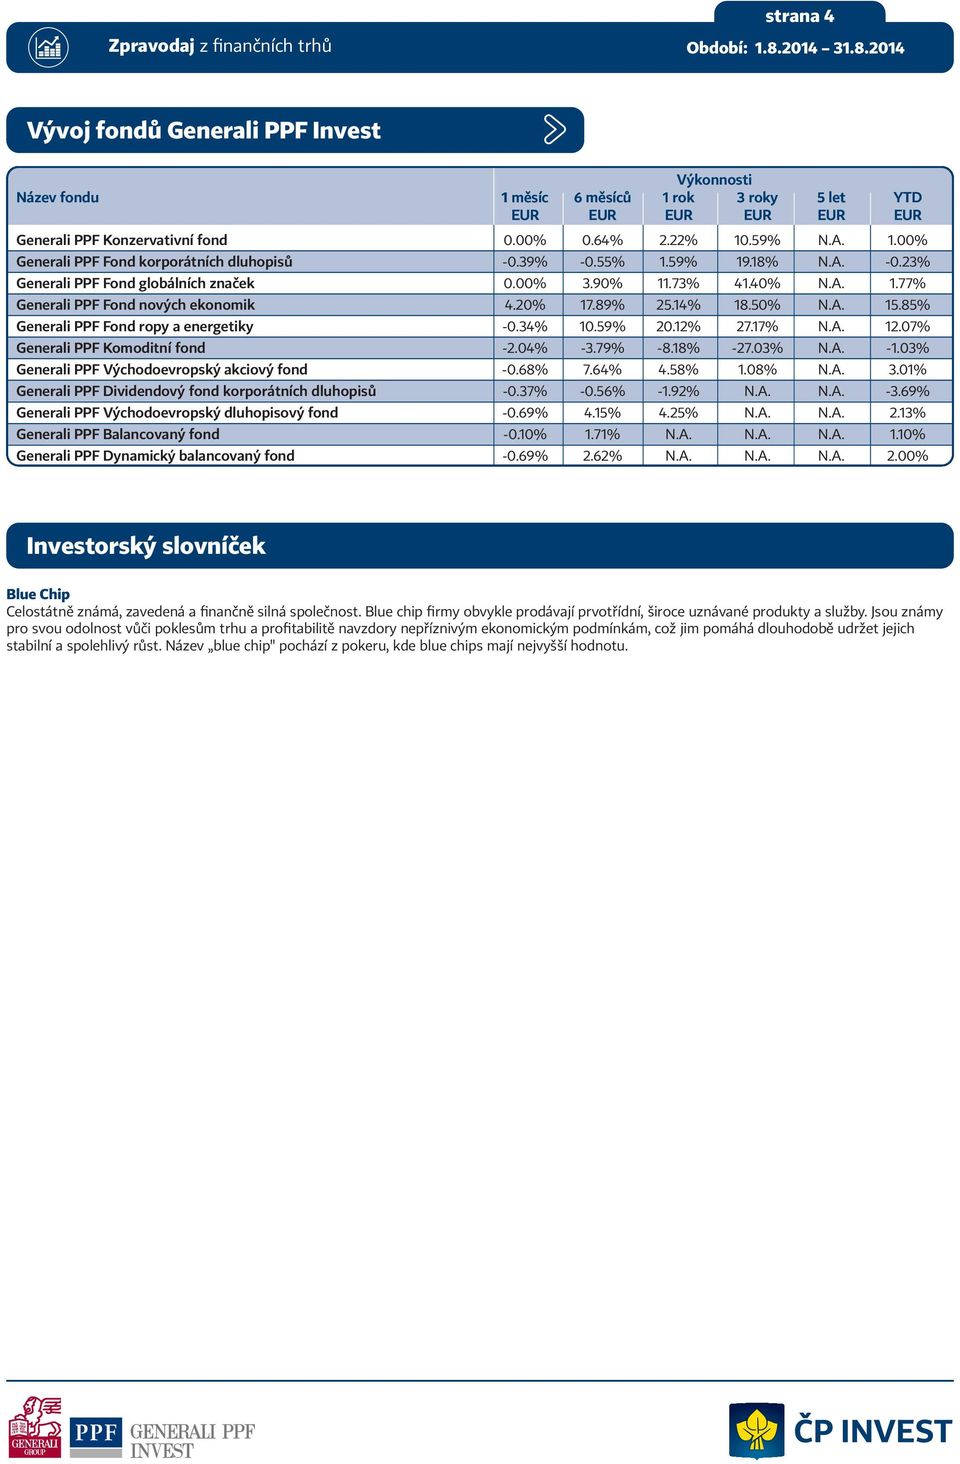 85% Generali PPF Fond ropy a energetiky -0.34% 10.59% 20.12% 27.17% N.A. 12.07% Generali PPF Komoditní fond -2.04% -3.79% -8.18% -27.03% N.A. -1.03% Generali PPF Východoevropský akciový fond -0.68% 7.